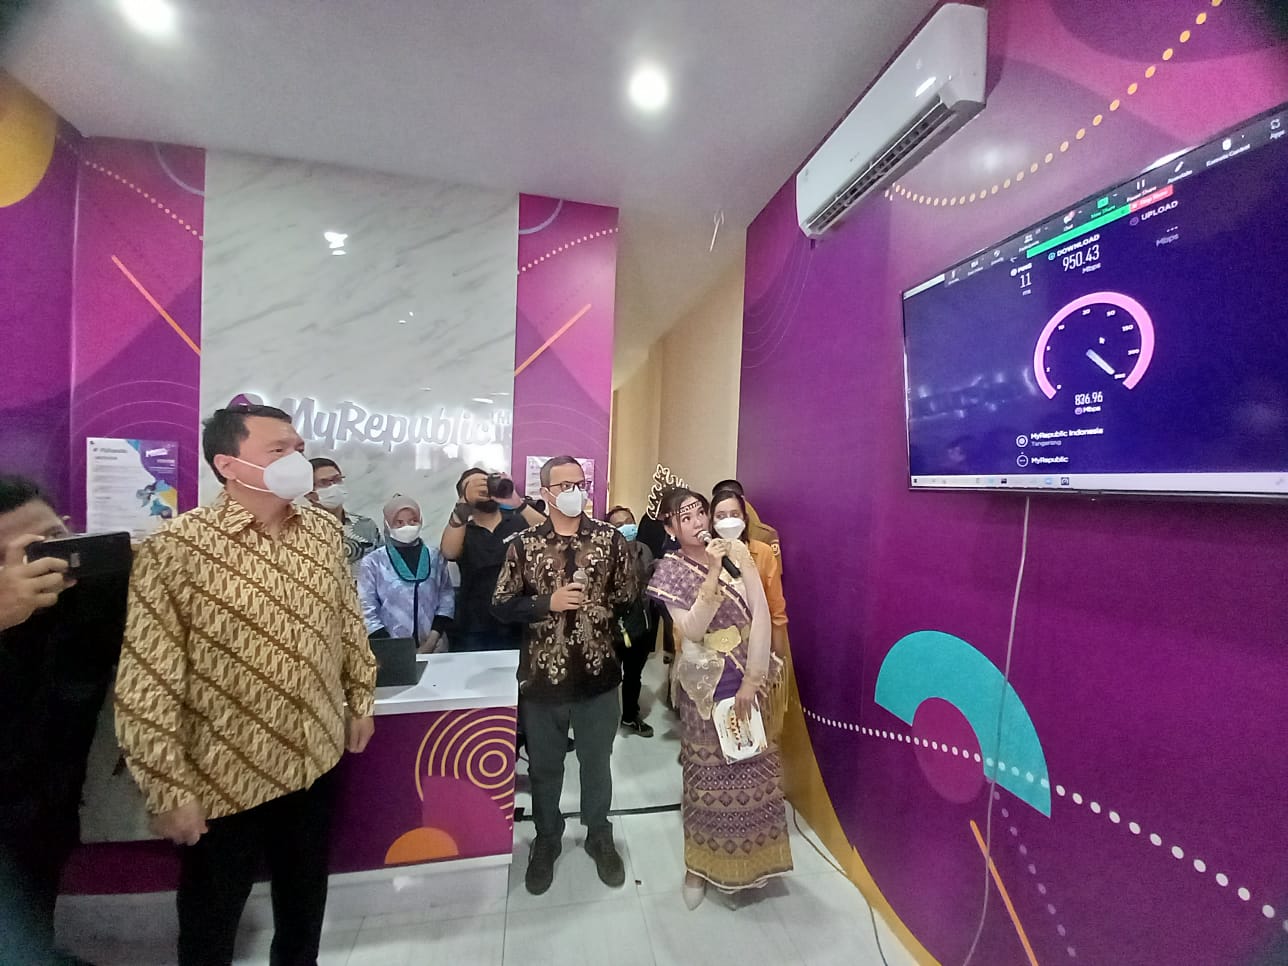 MyRepublic Siap Manjakan Warga Lampung Menikmati Internet Tercepat dan Tanpa Batas